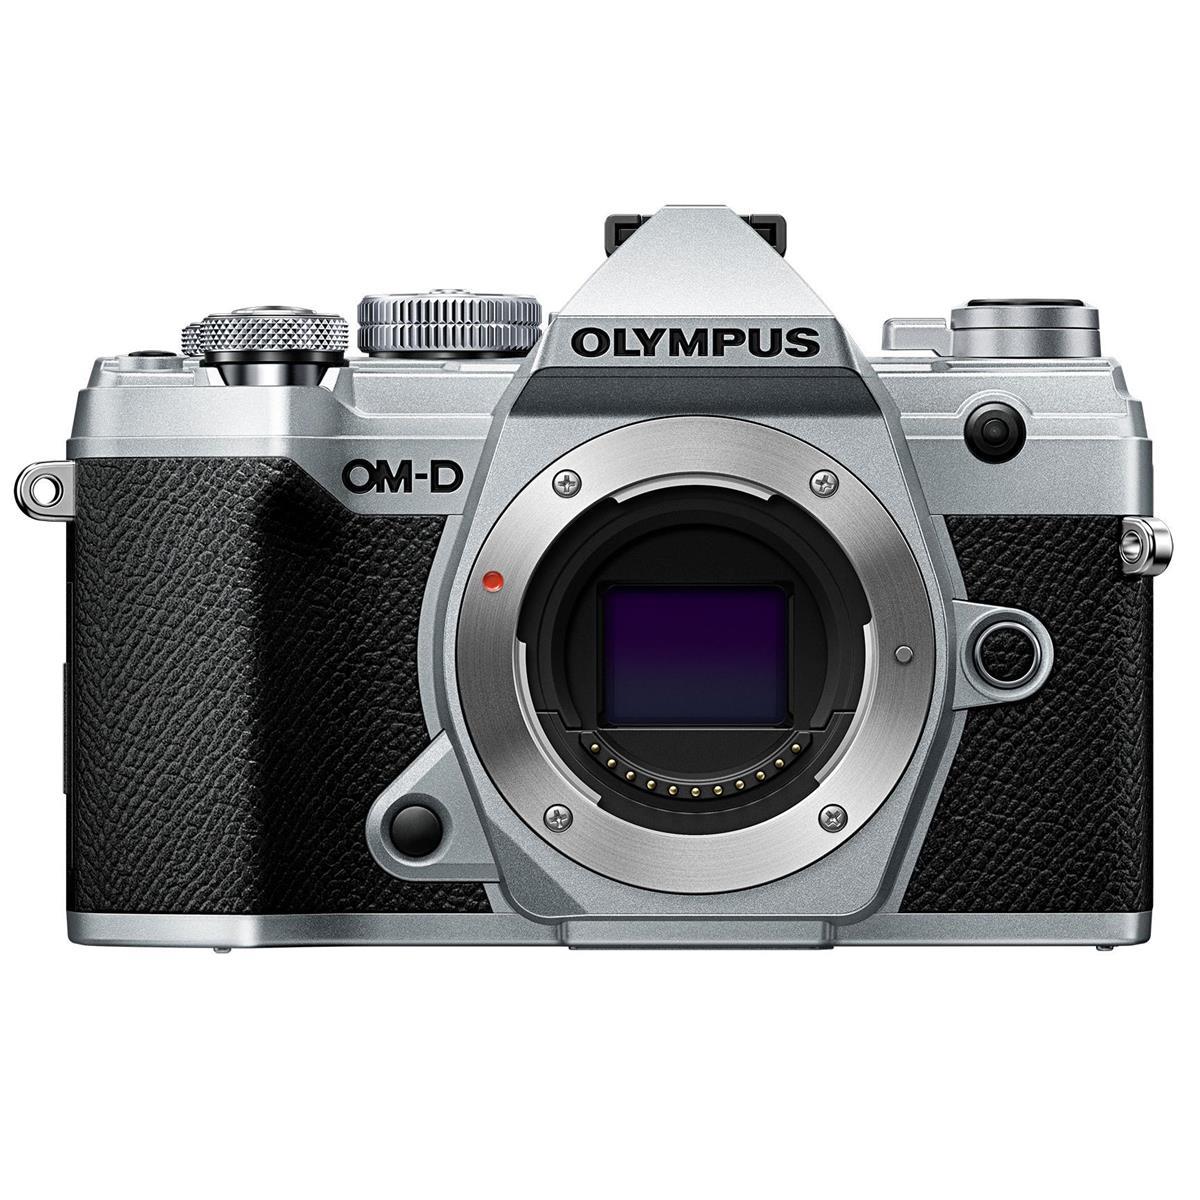 Olympus OM-D E-M5 Mark III Mirrorless Camera Body, Silver